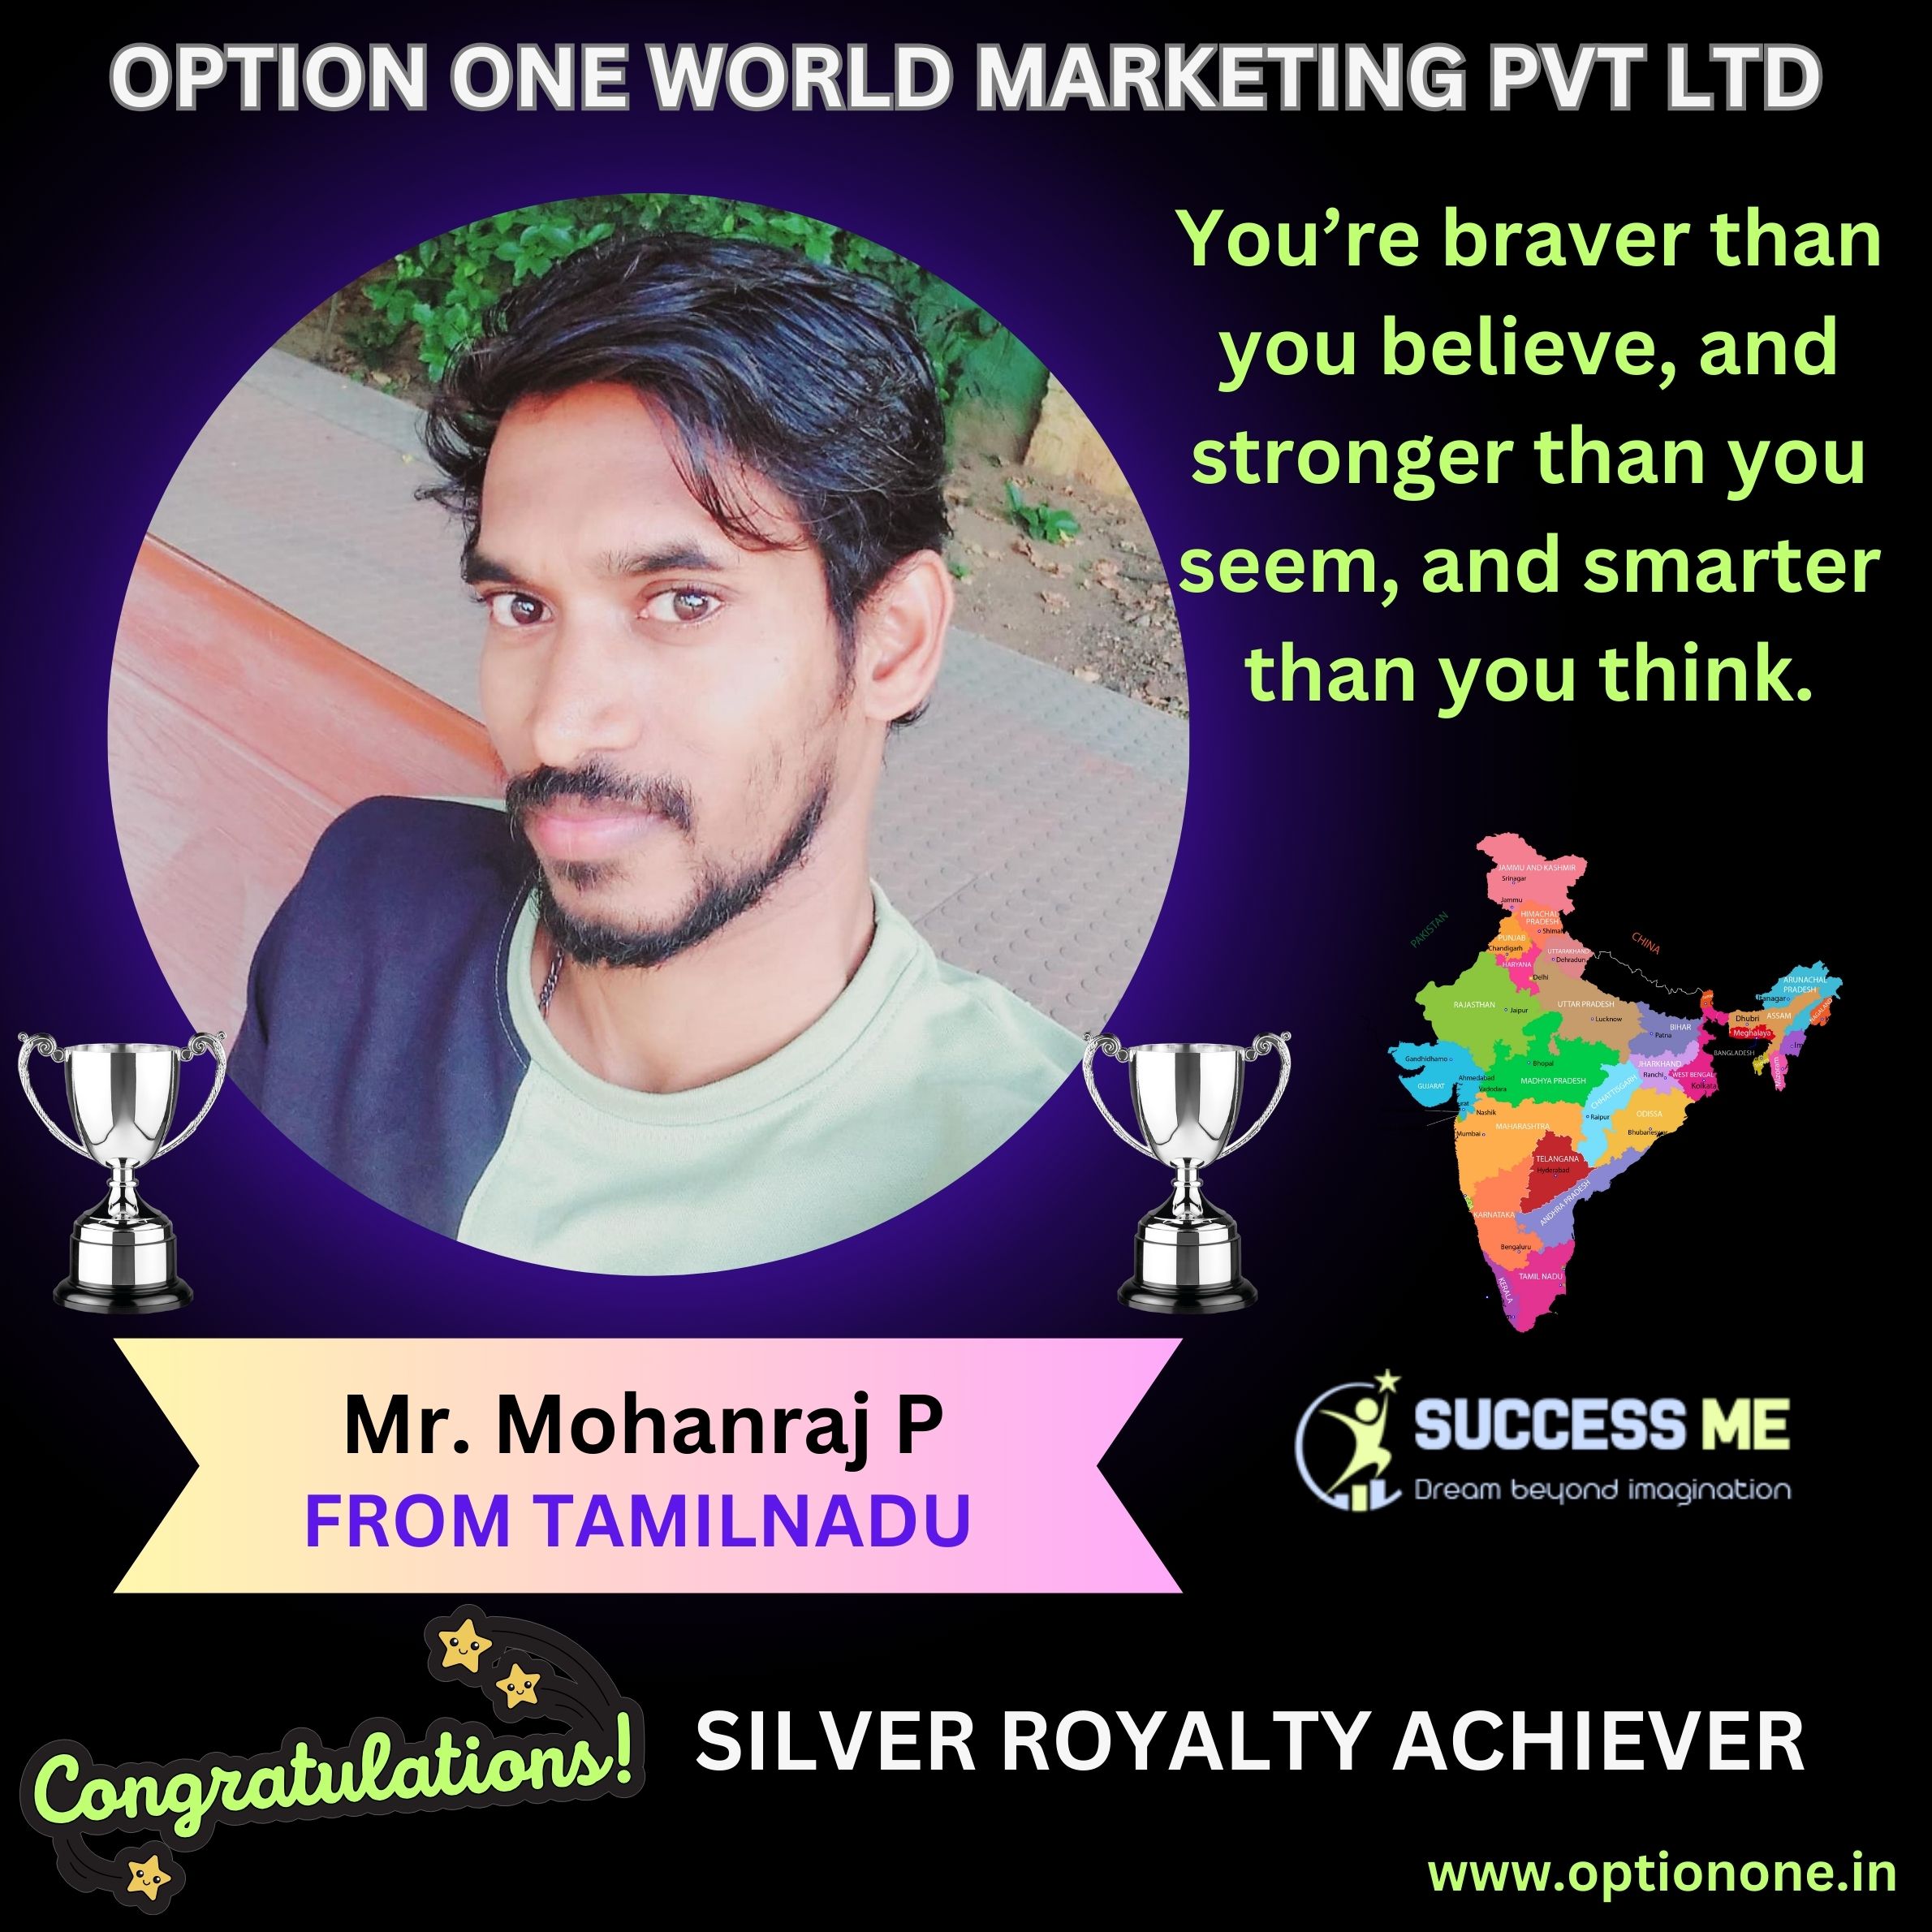 Mr. Mohanraj P